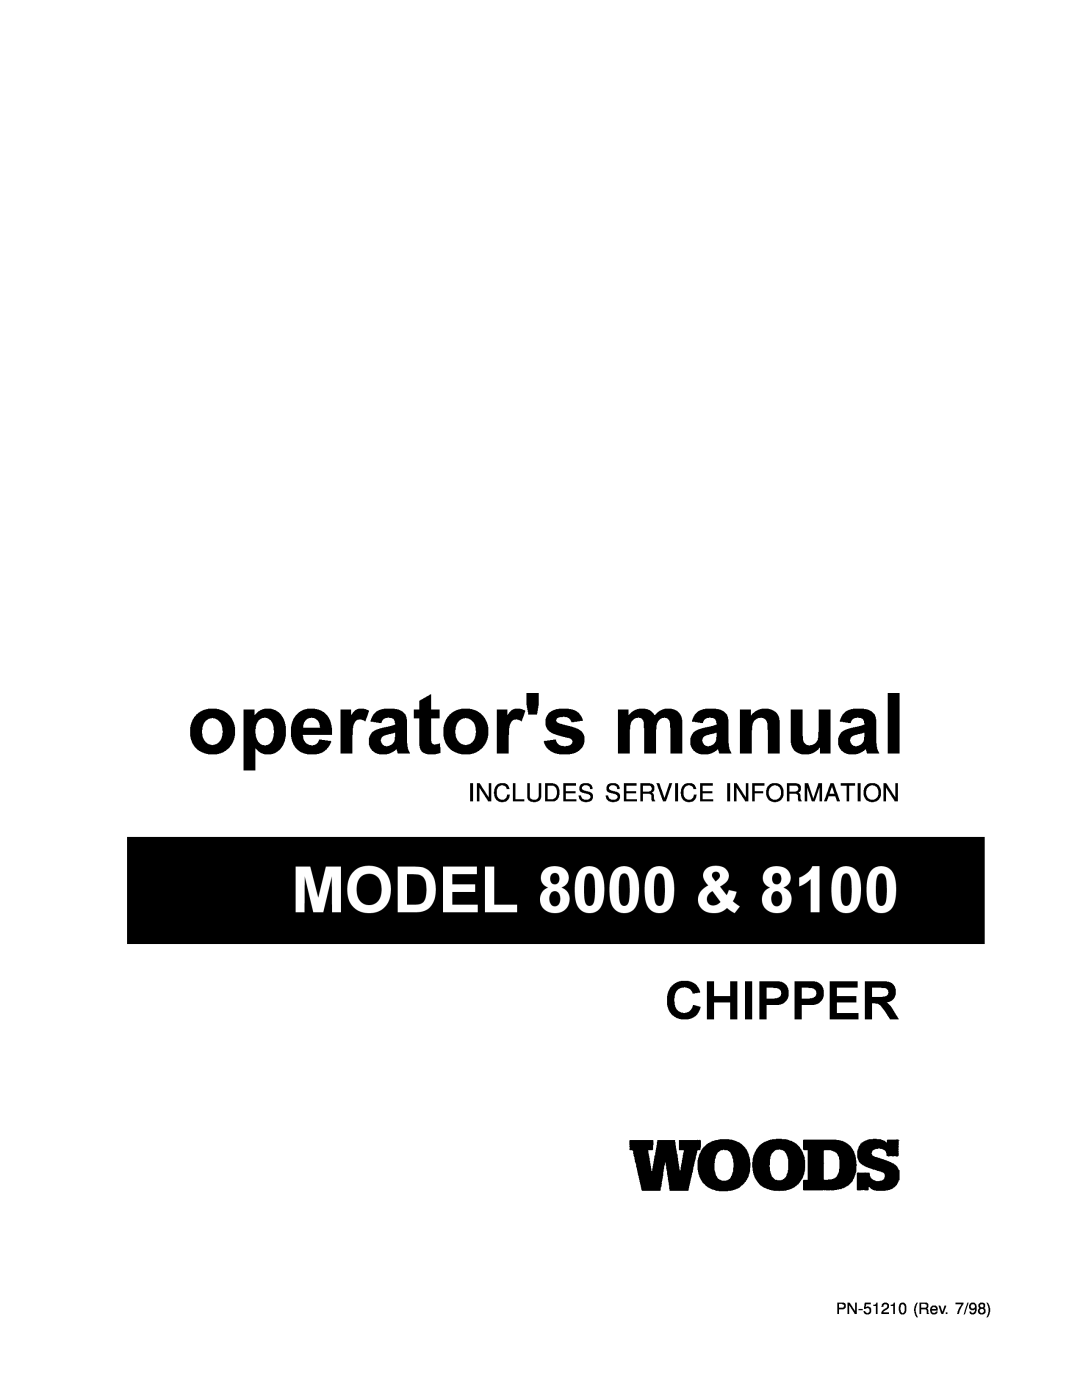 Woods Equipment 8100 manual operators manual, MODEL 8000, Chipper, Includes Service Information 